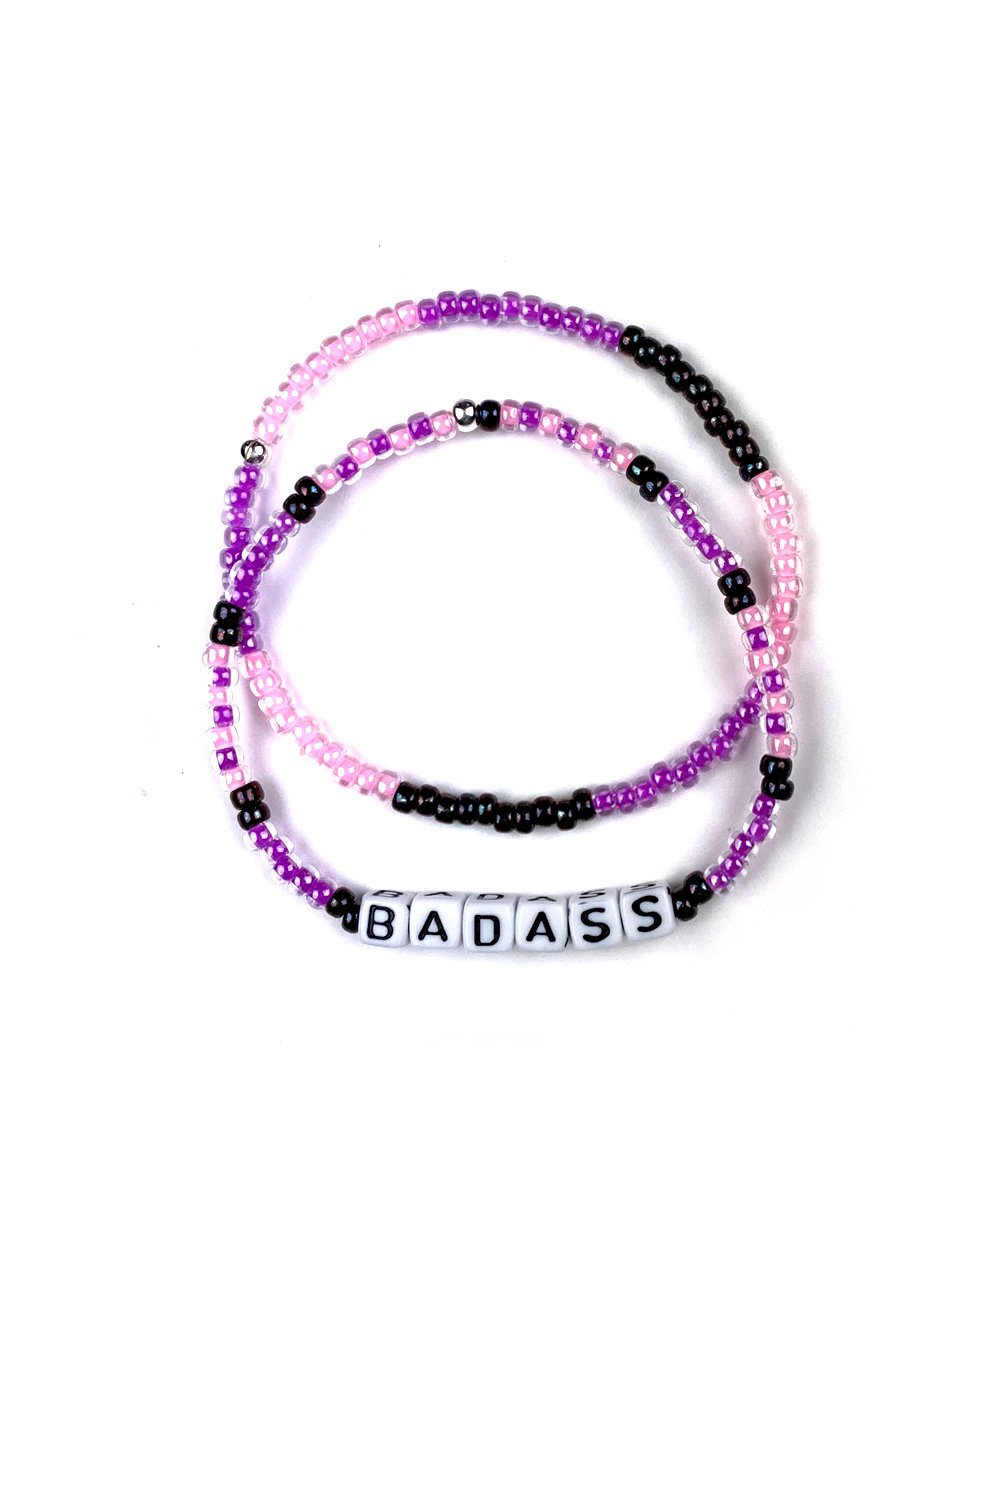 Badass Bracelet - Sarah Marie Design Studio